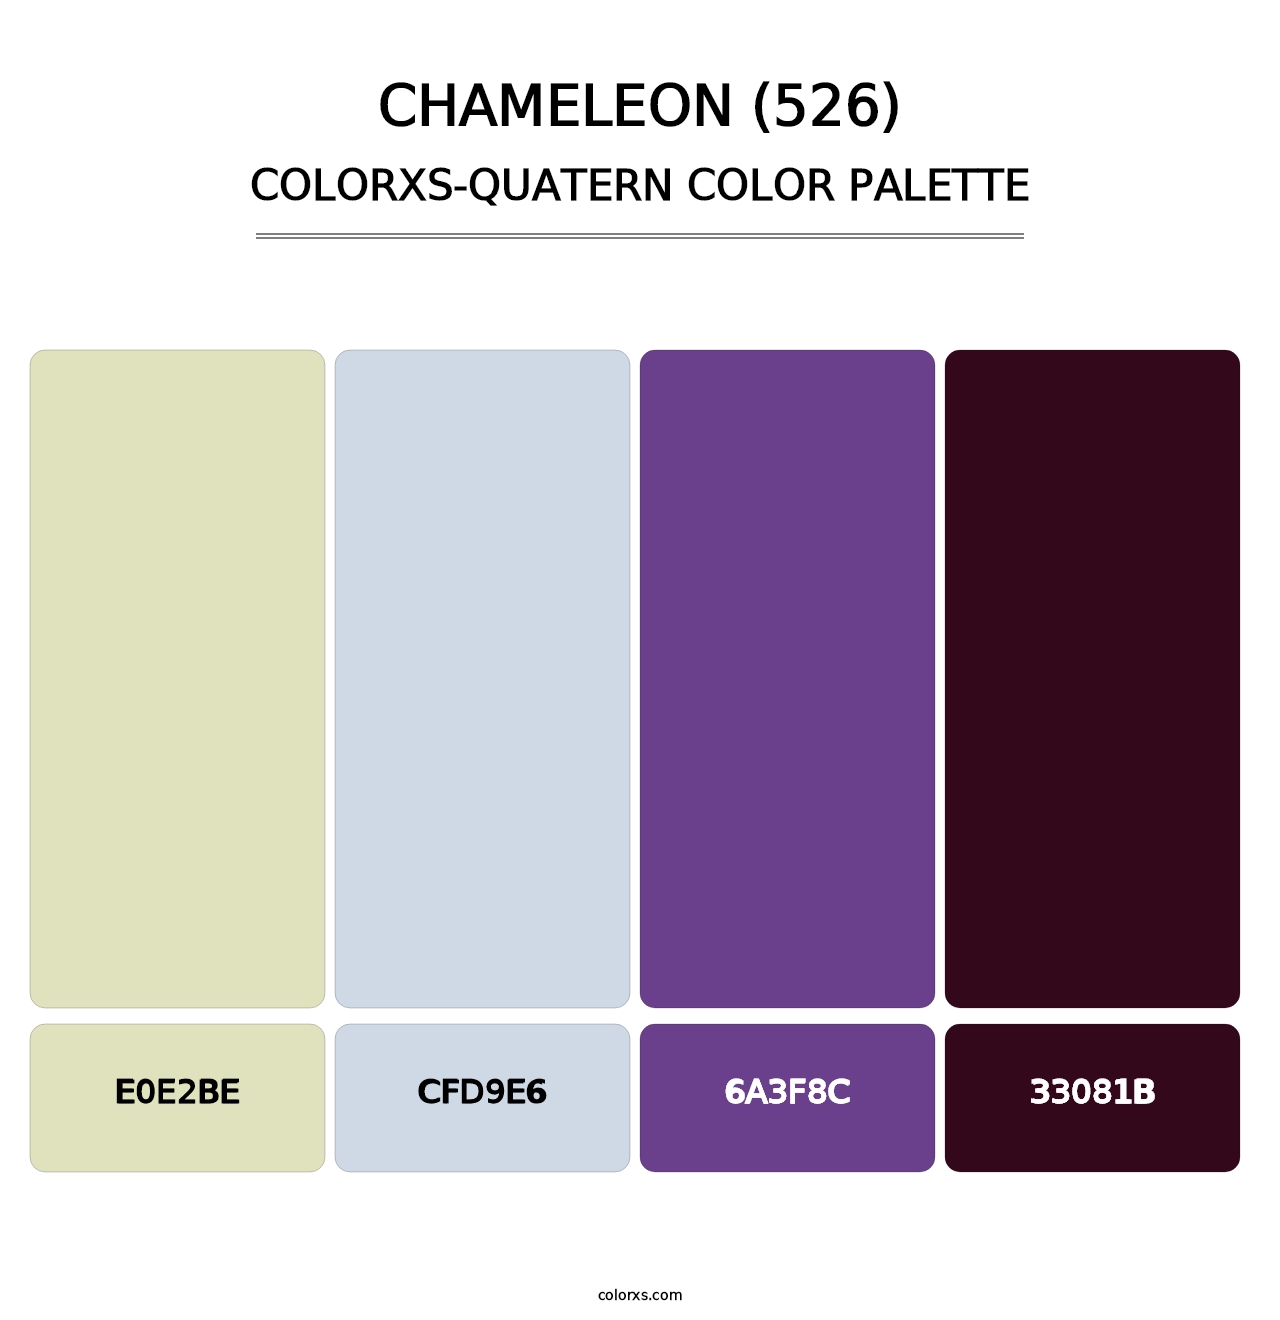 Chameleon (526) - Colorxs Quatern Palette